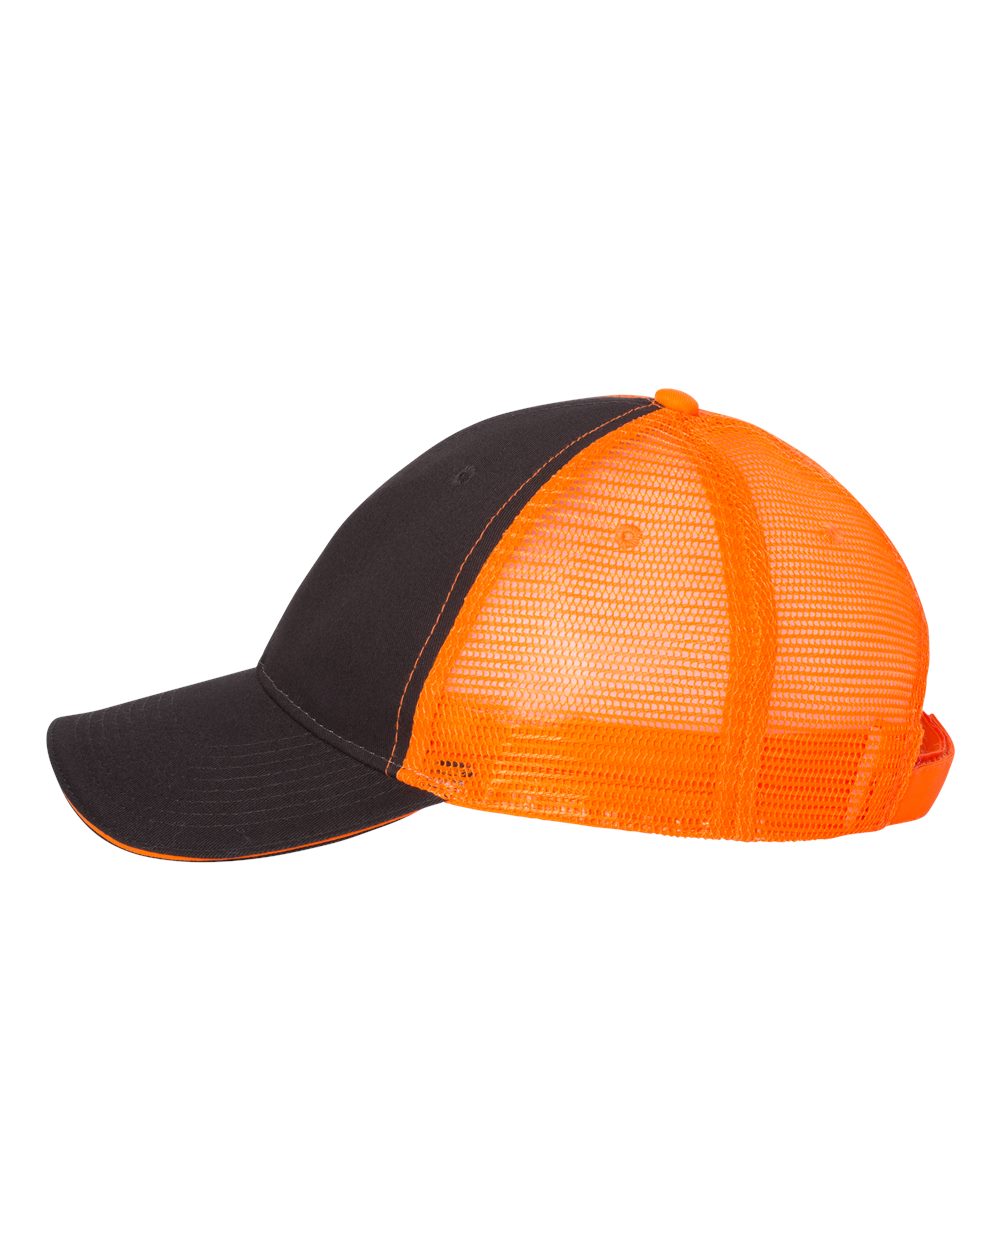 Sandwich Trucker Cap - Charcoal/Neon Orange